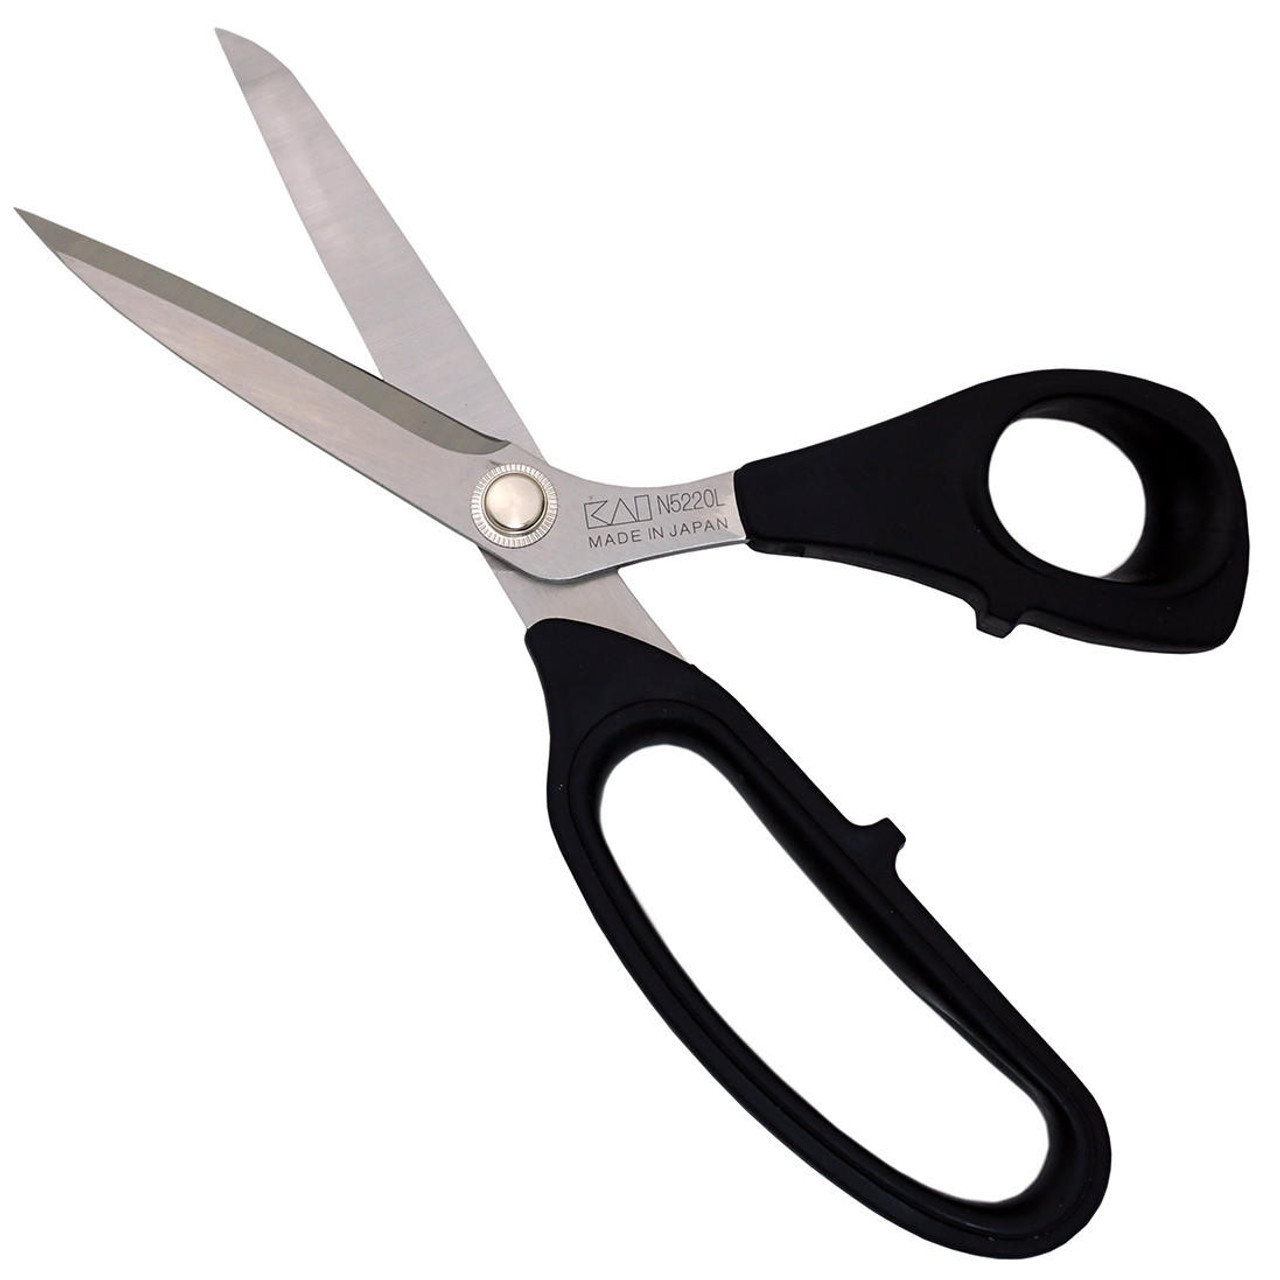 Kai 5250 10 Inch Sewing Scissors